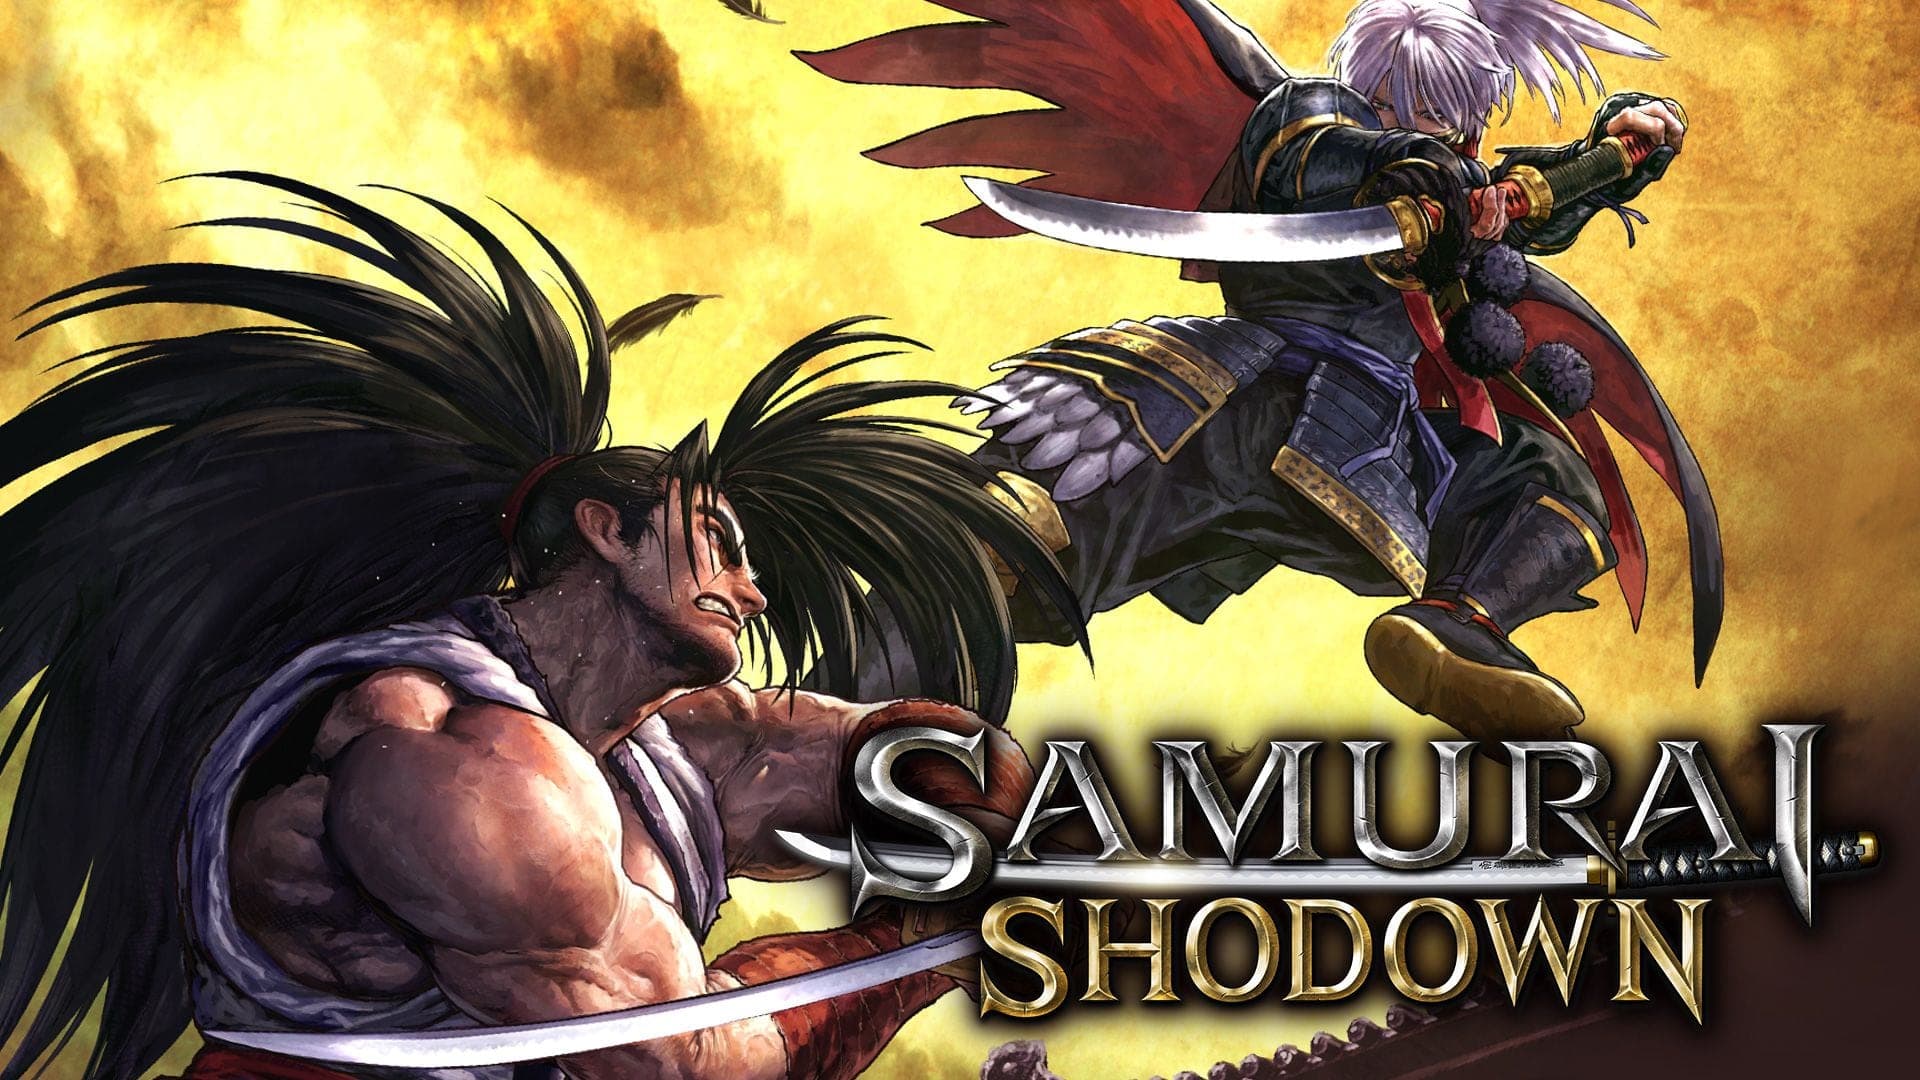 Samurai Shodown เตรียมวางจำหน่ายบน Epic Games Store 11 มิ.ย. นี้